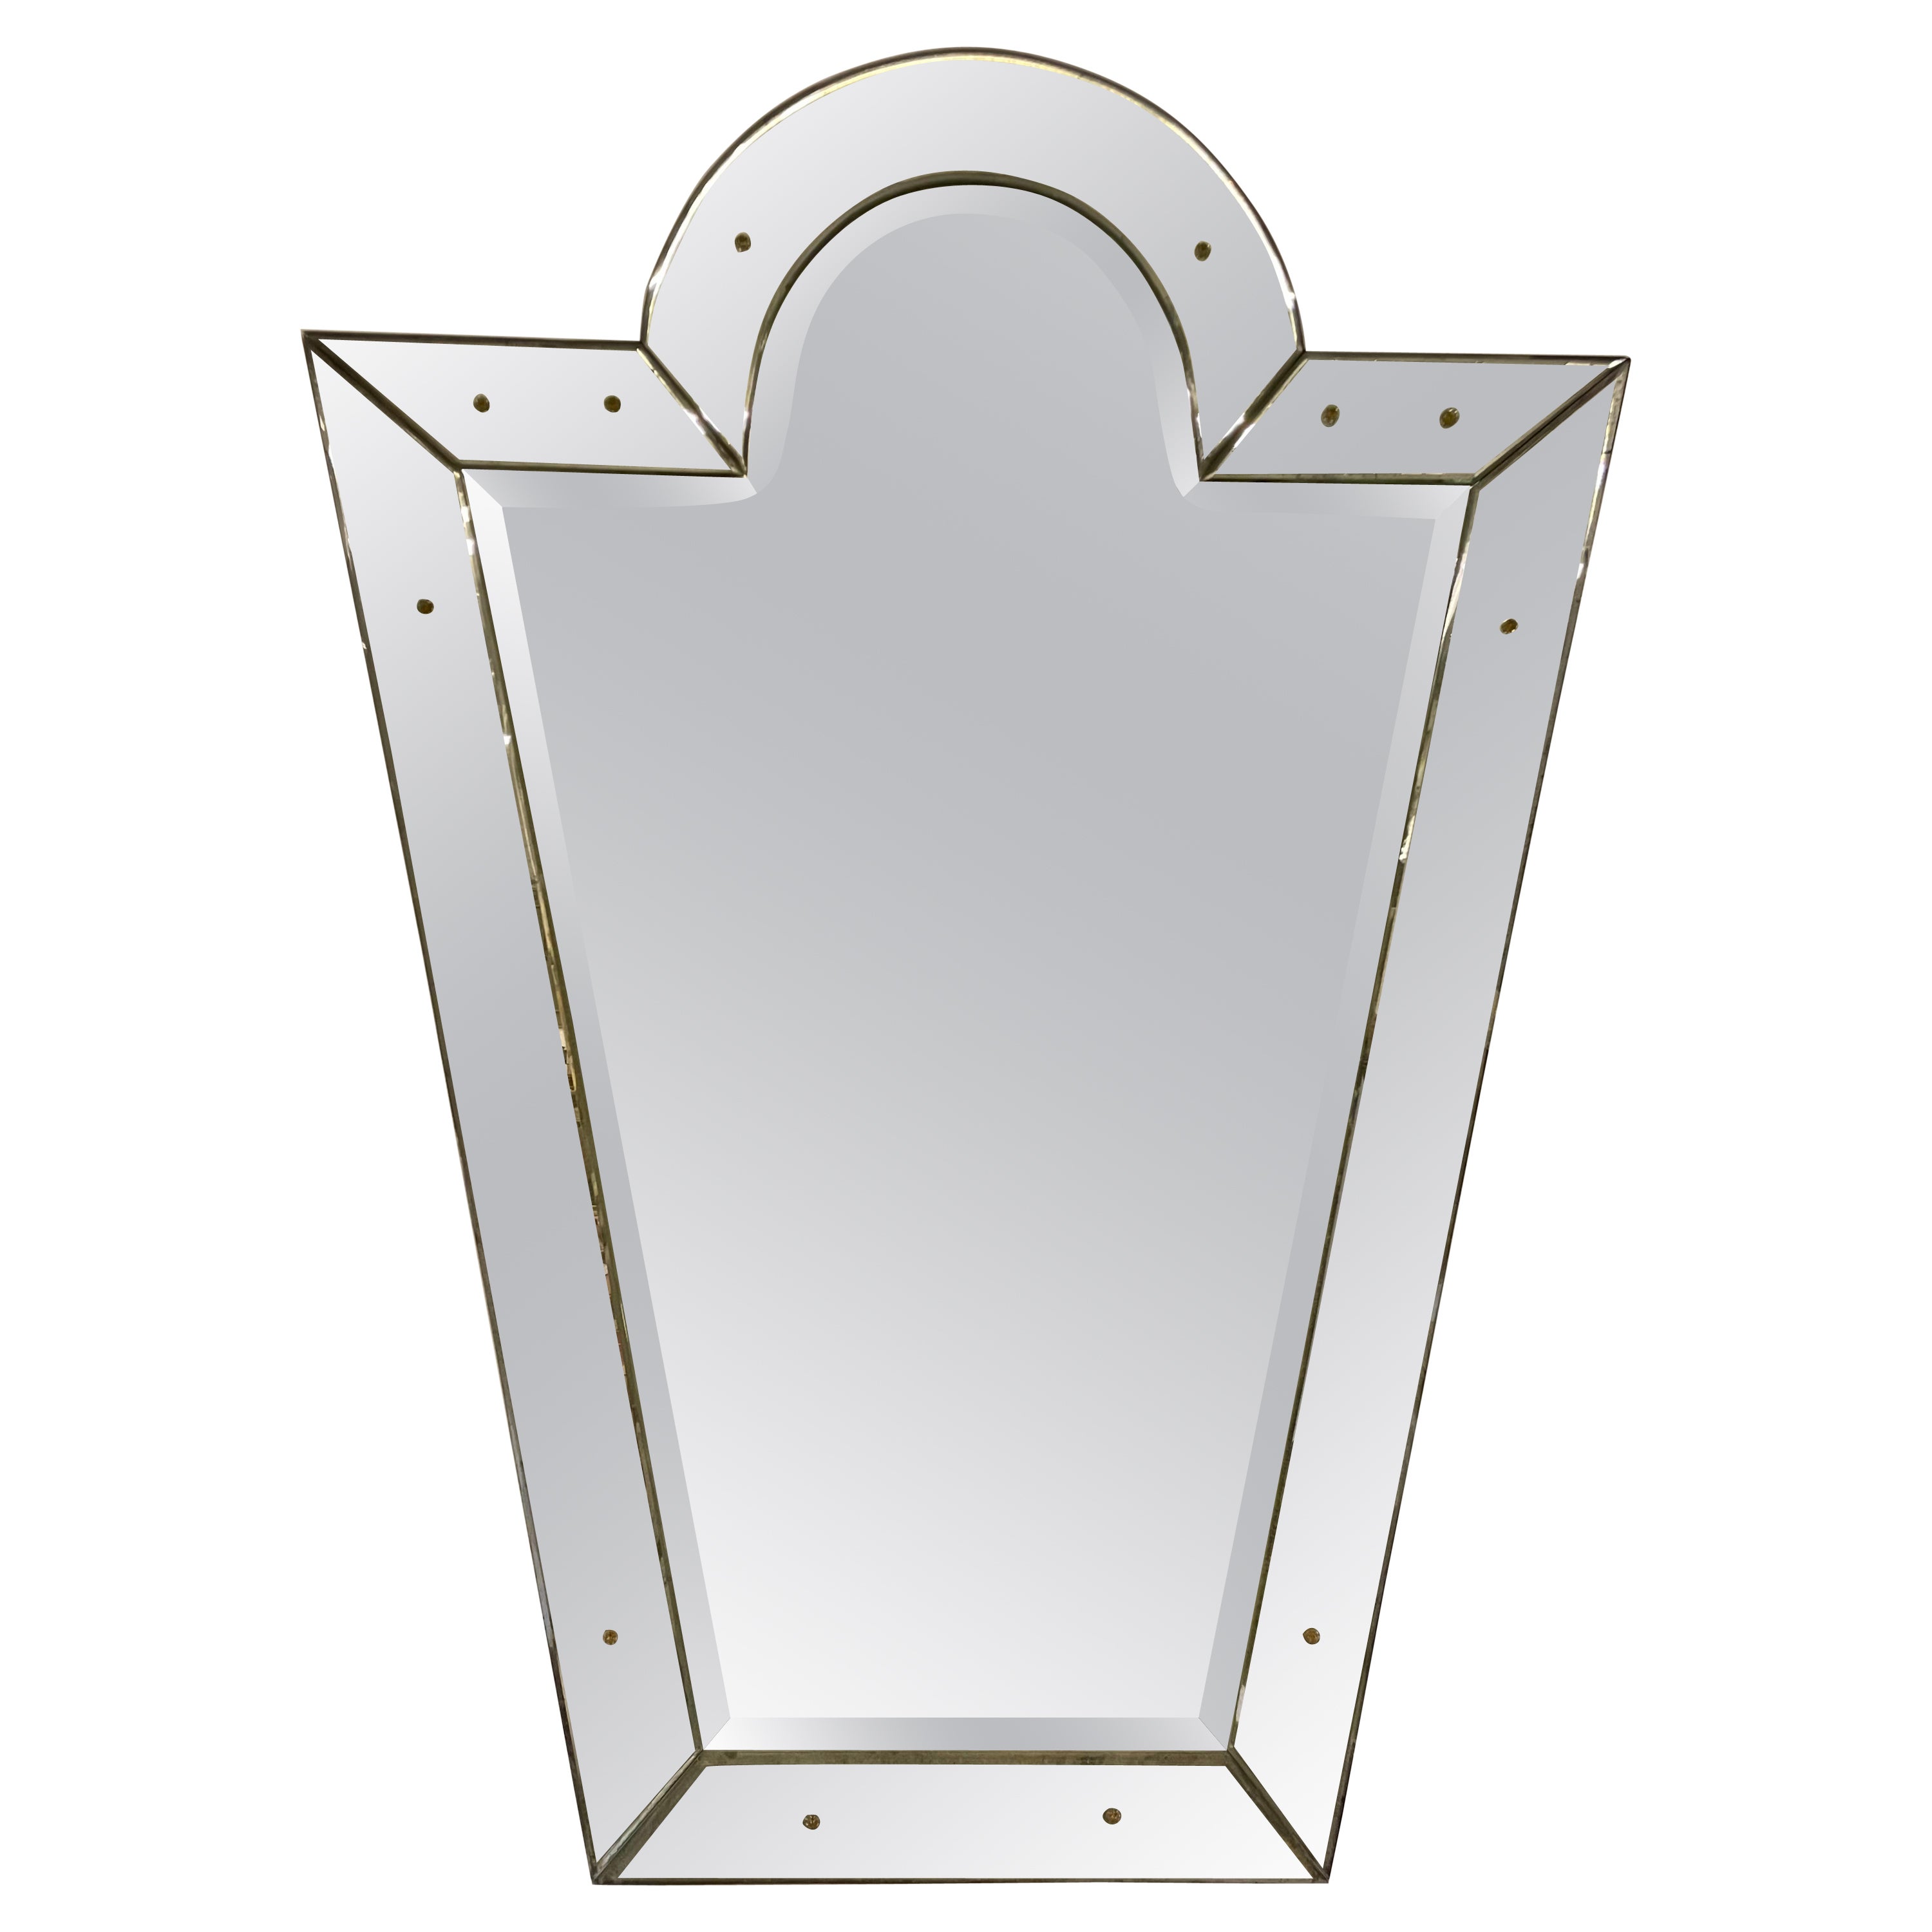 Venetian 'Key Hole' Shaped Beveled Glass Mirror, Hollywood Regency Style